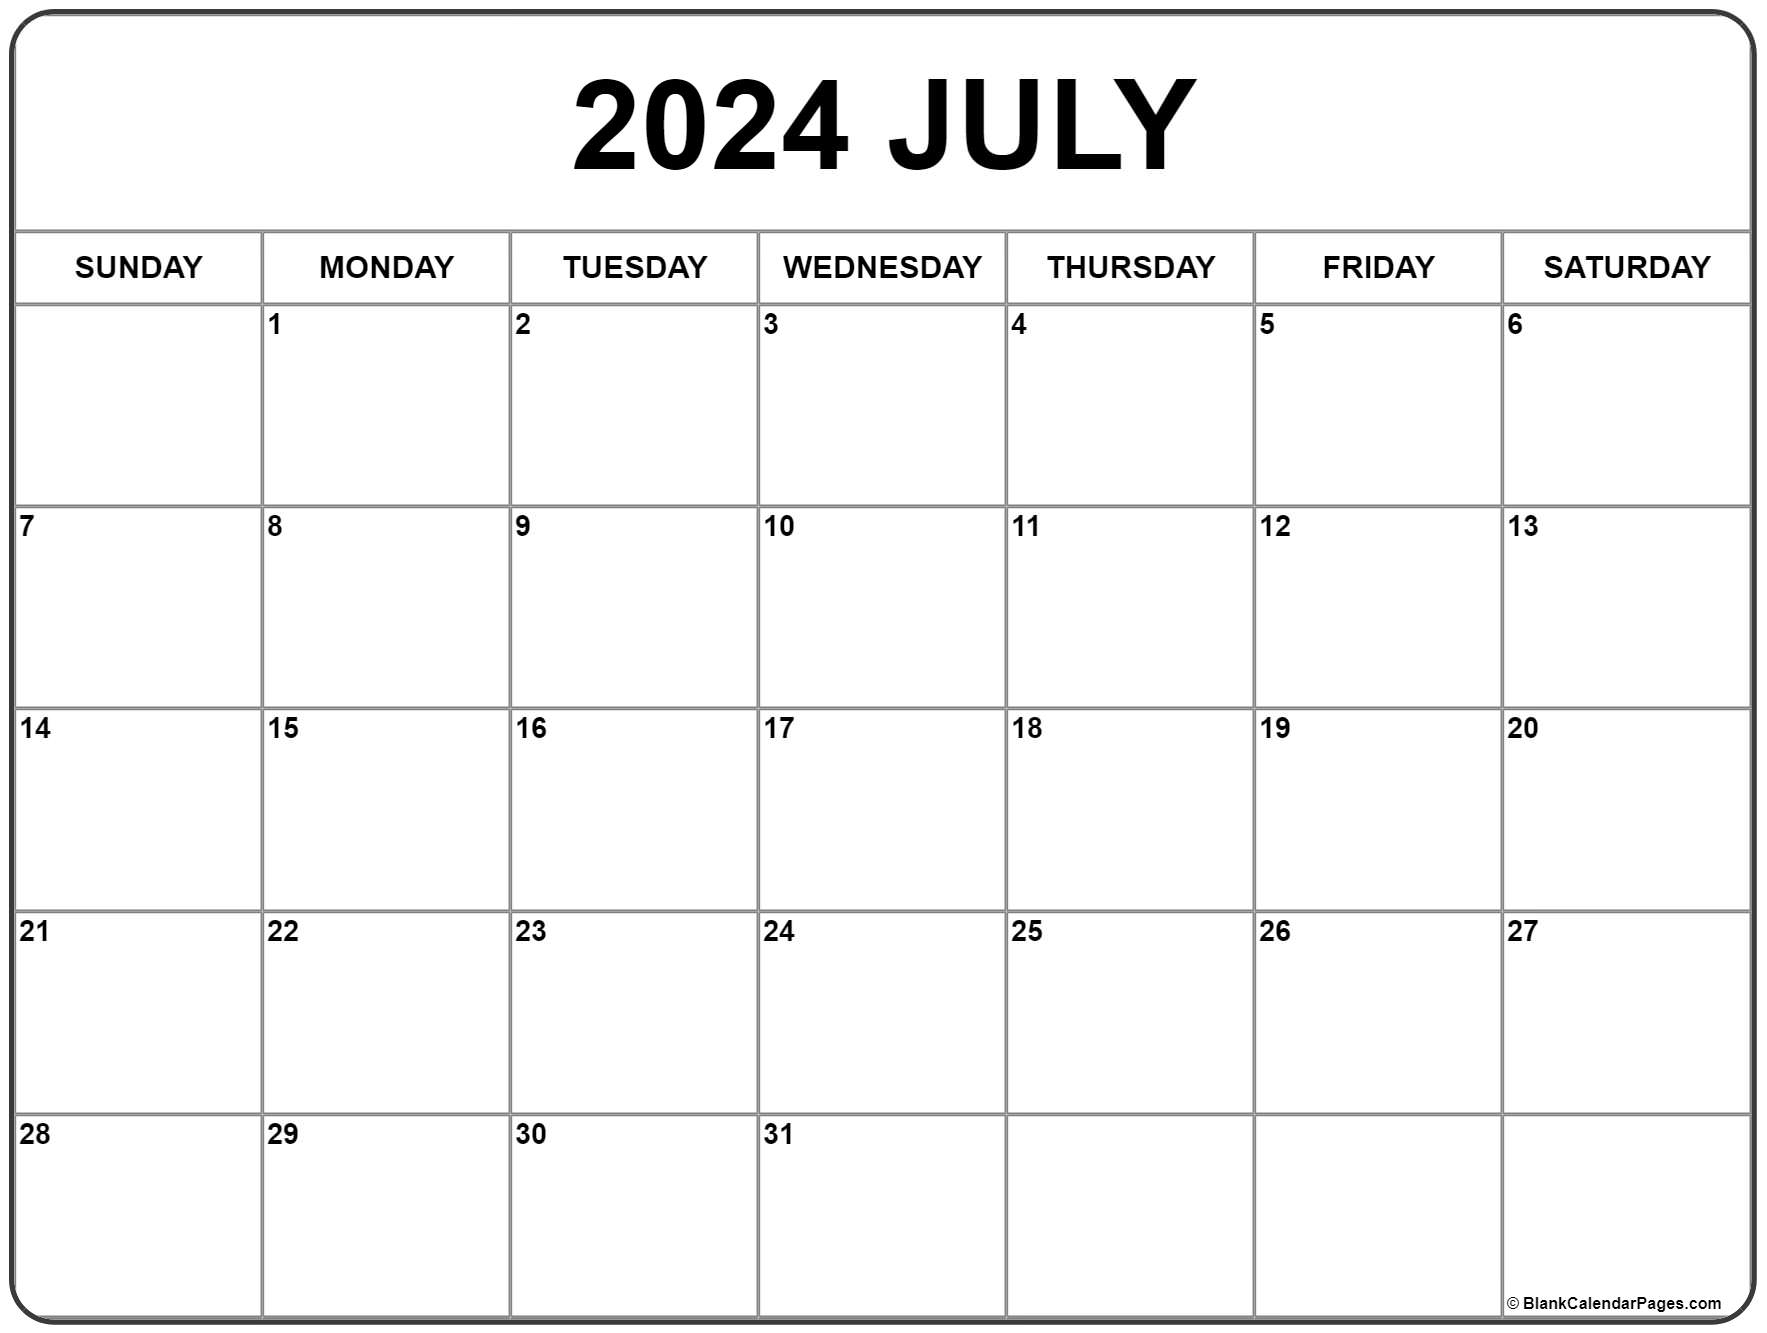 July 2020 calendar free printable calendar